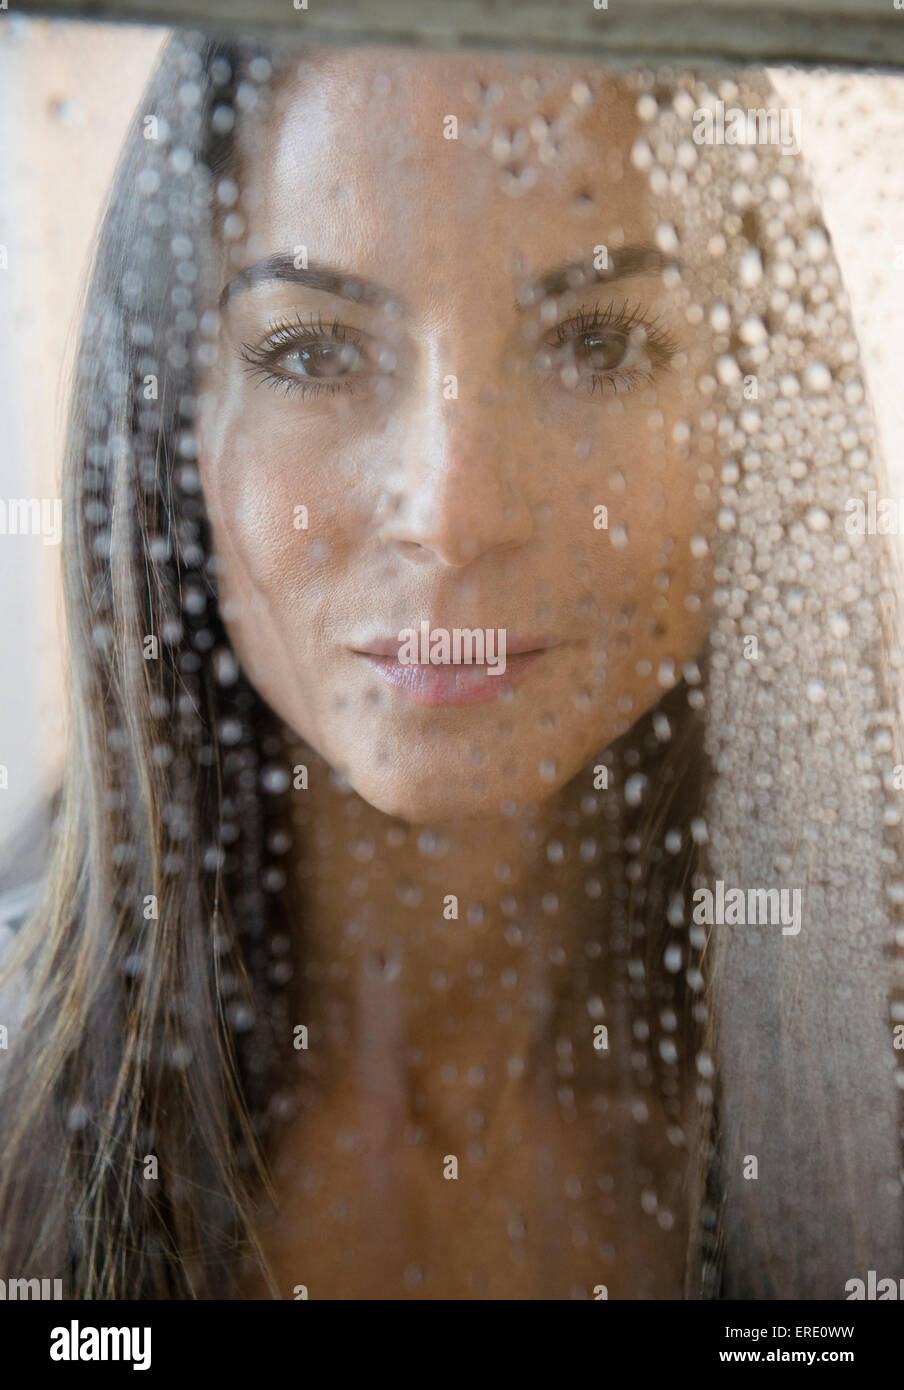 Caucasian woman peering through wet window Stock Photo